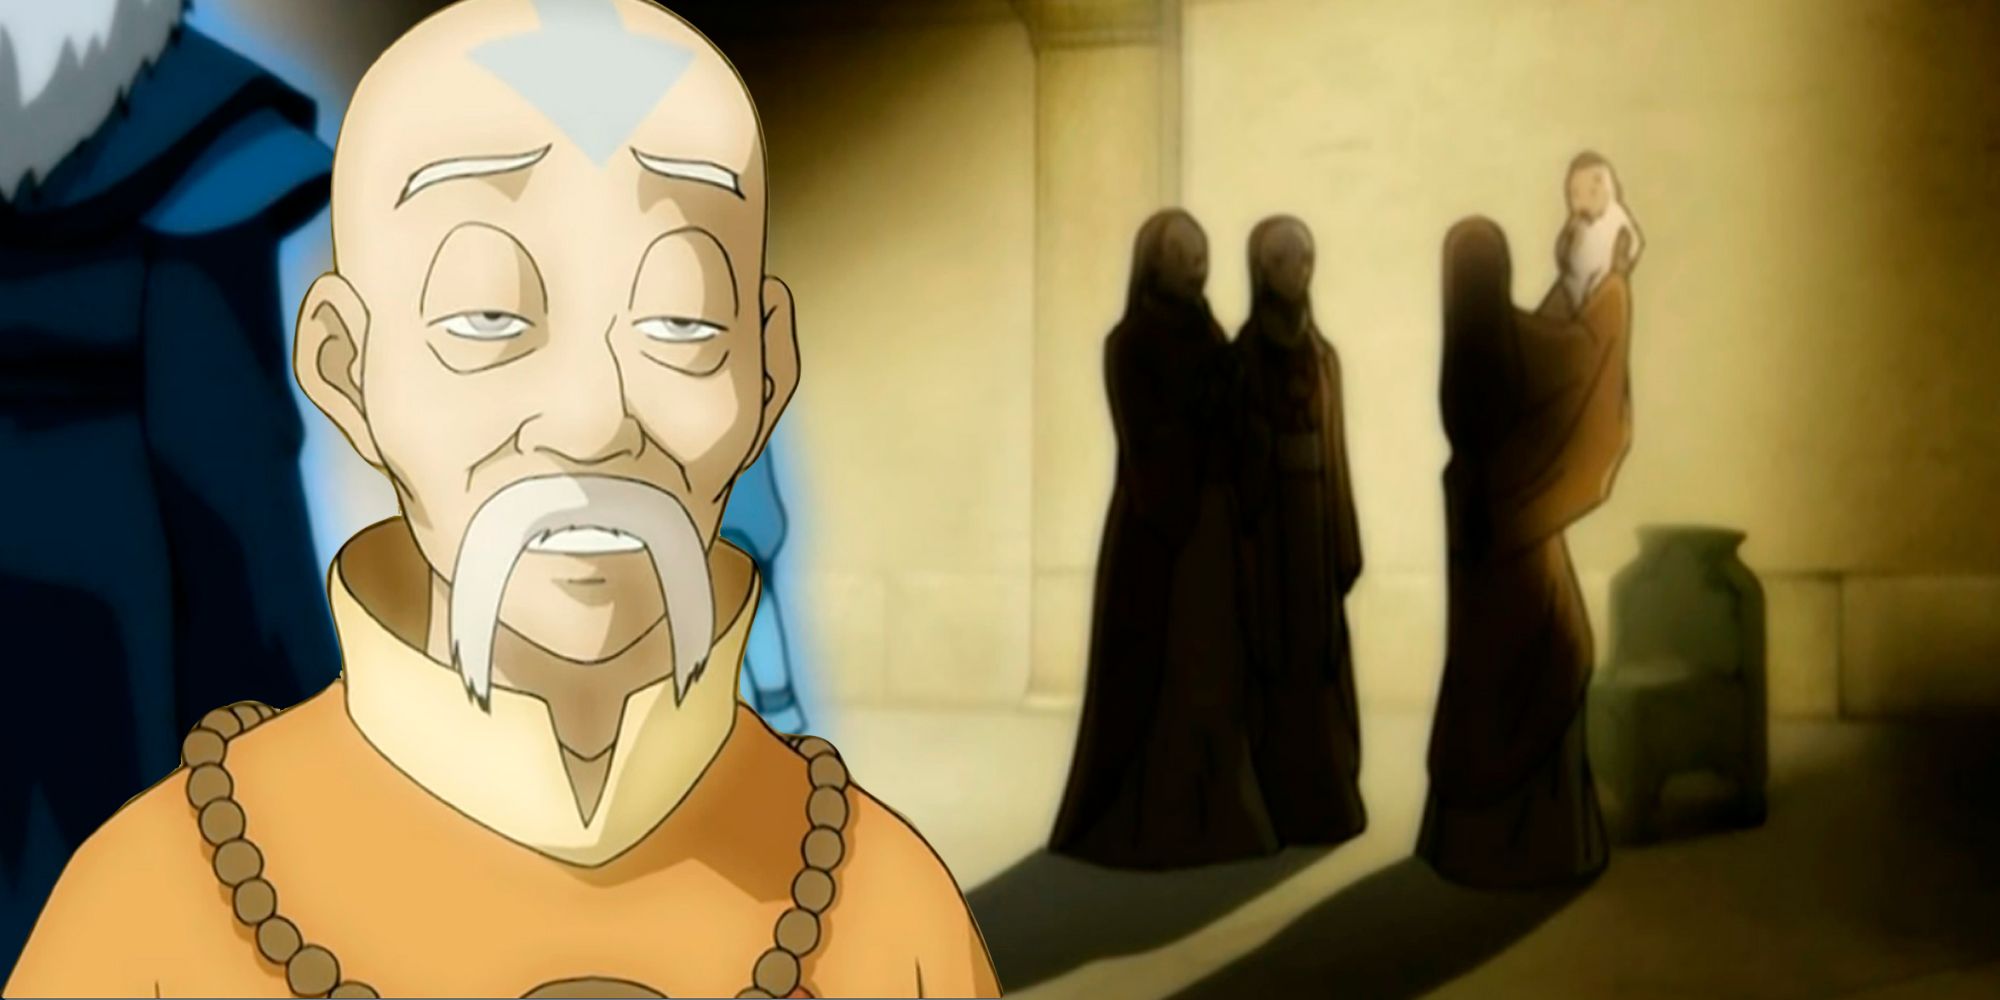 Aang was Raised by Monk Gyatso in Avatar The Last Airbender